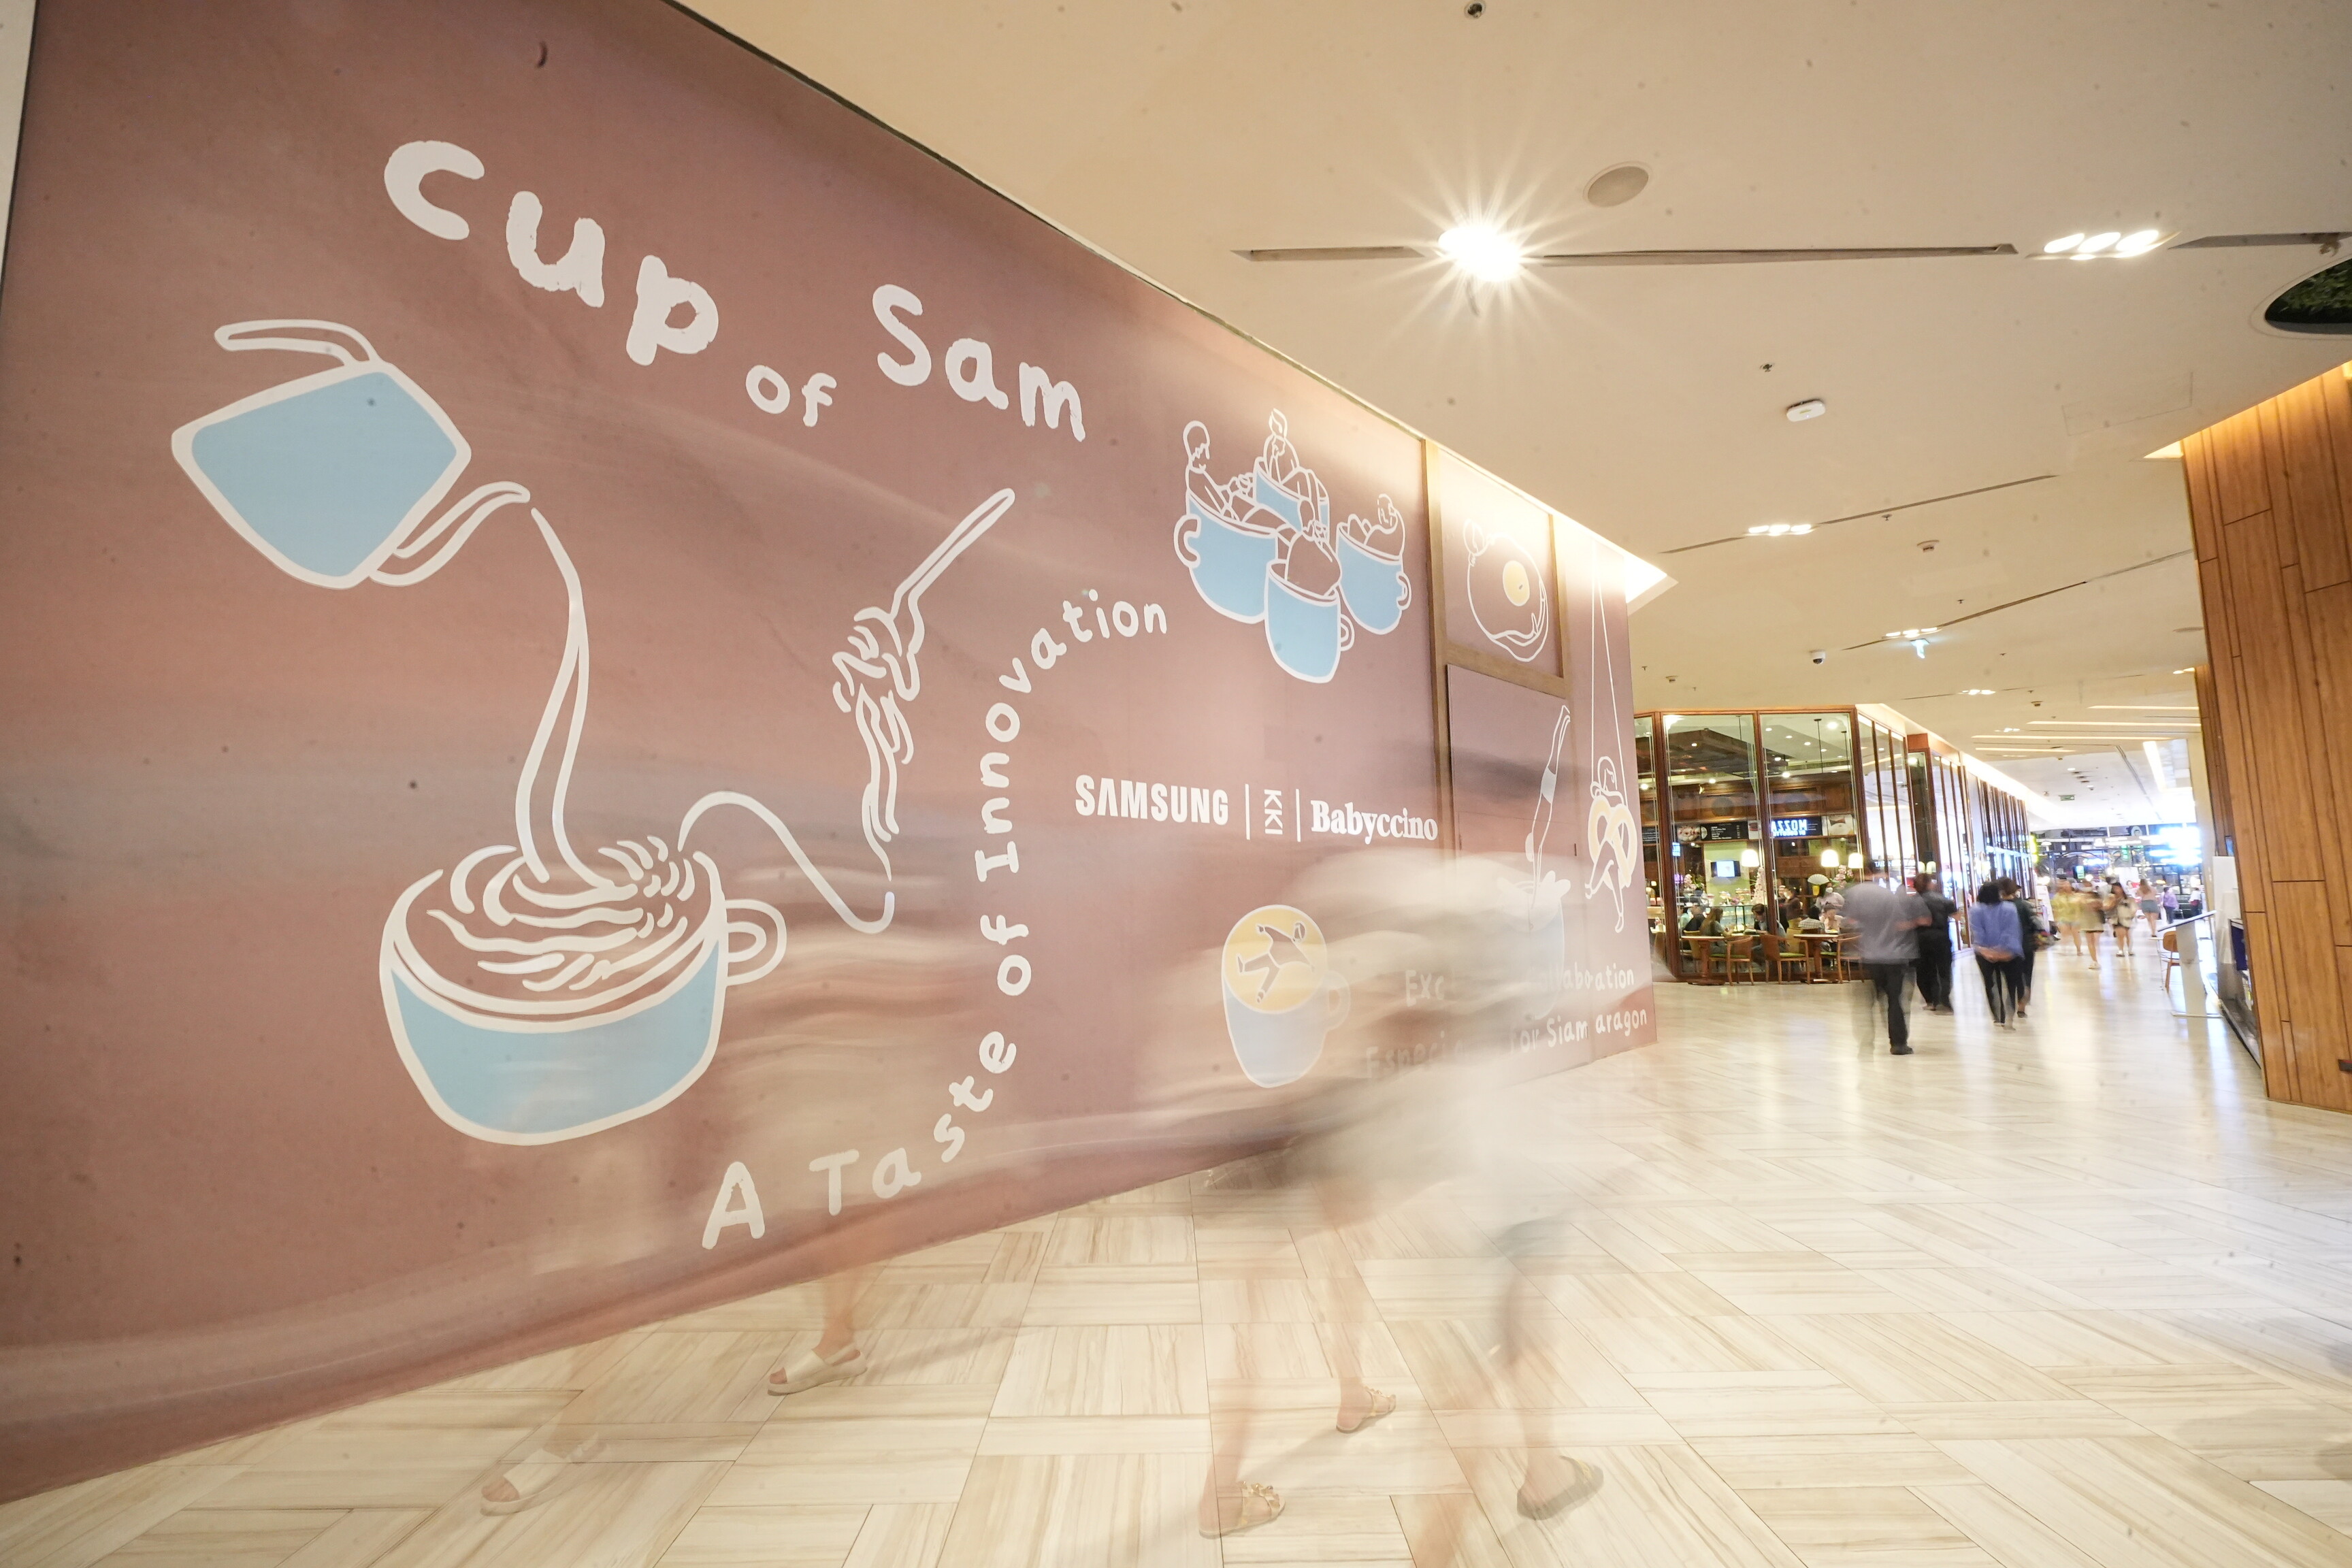 Cup of SAM คาเฟ่ใหม่จากซัมซุง  ความอร่อยสุดครีเอทีฟ ผสานอินโนเวชัน และงานศิลปะอย่างกลมกล่อม พร้อมเสิร์ฟ 29 พ.ย. นี้ ที่สยามพารากอน